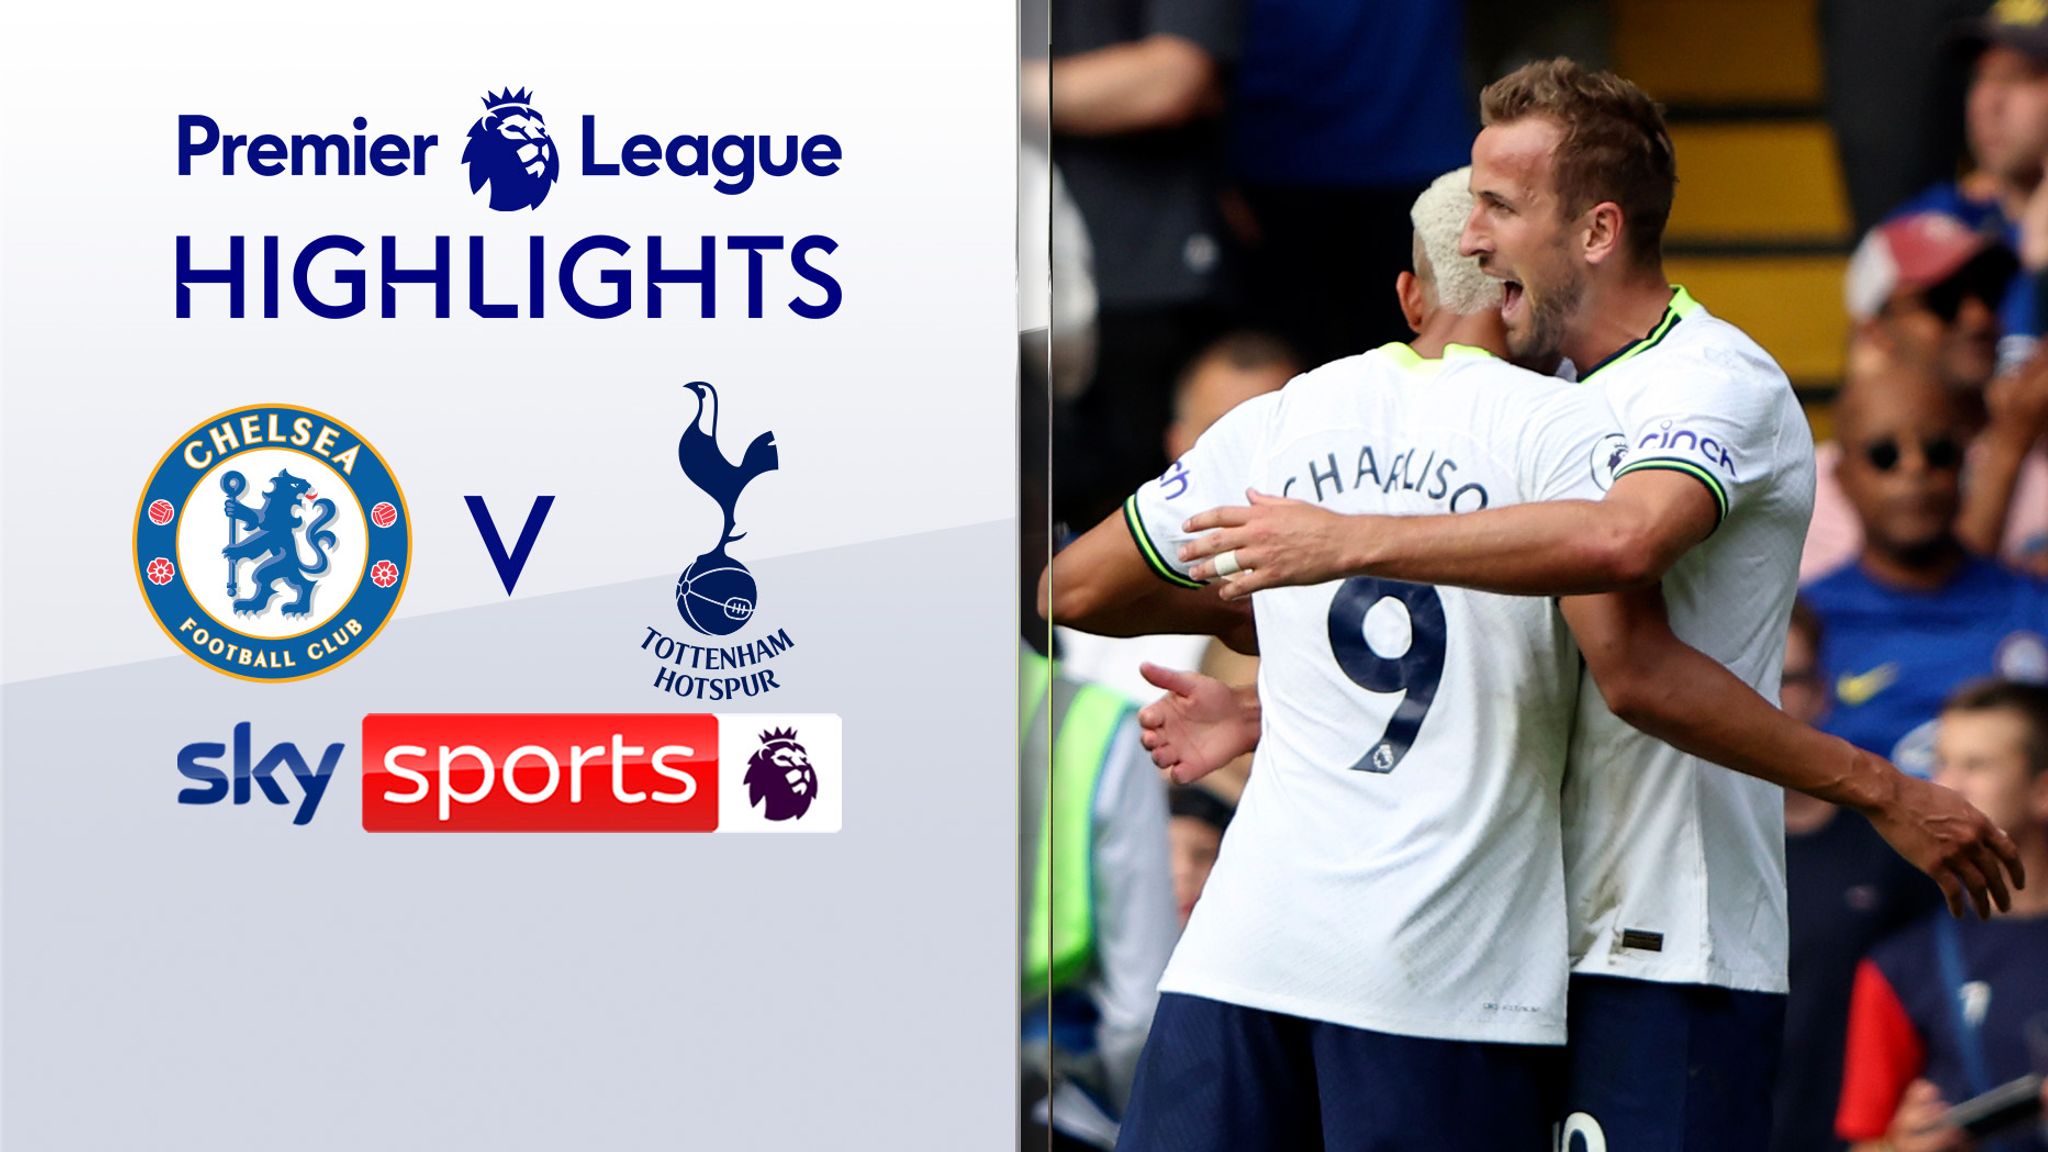 PL2 Highlights: Tottenham 3-2 Chelsea, Video